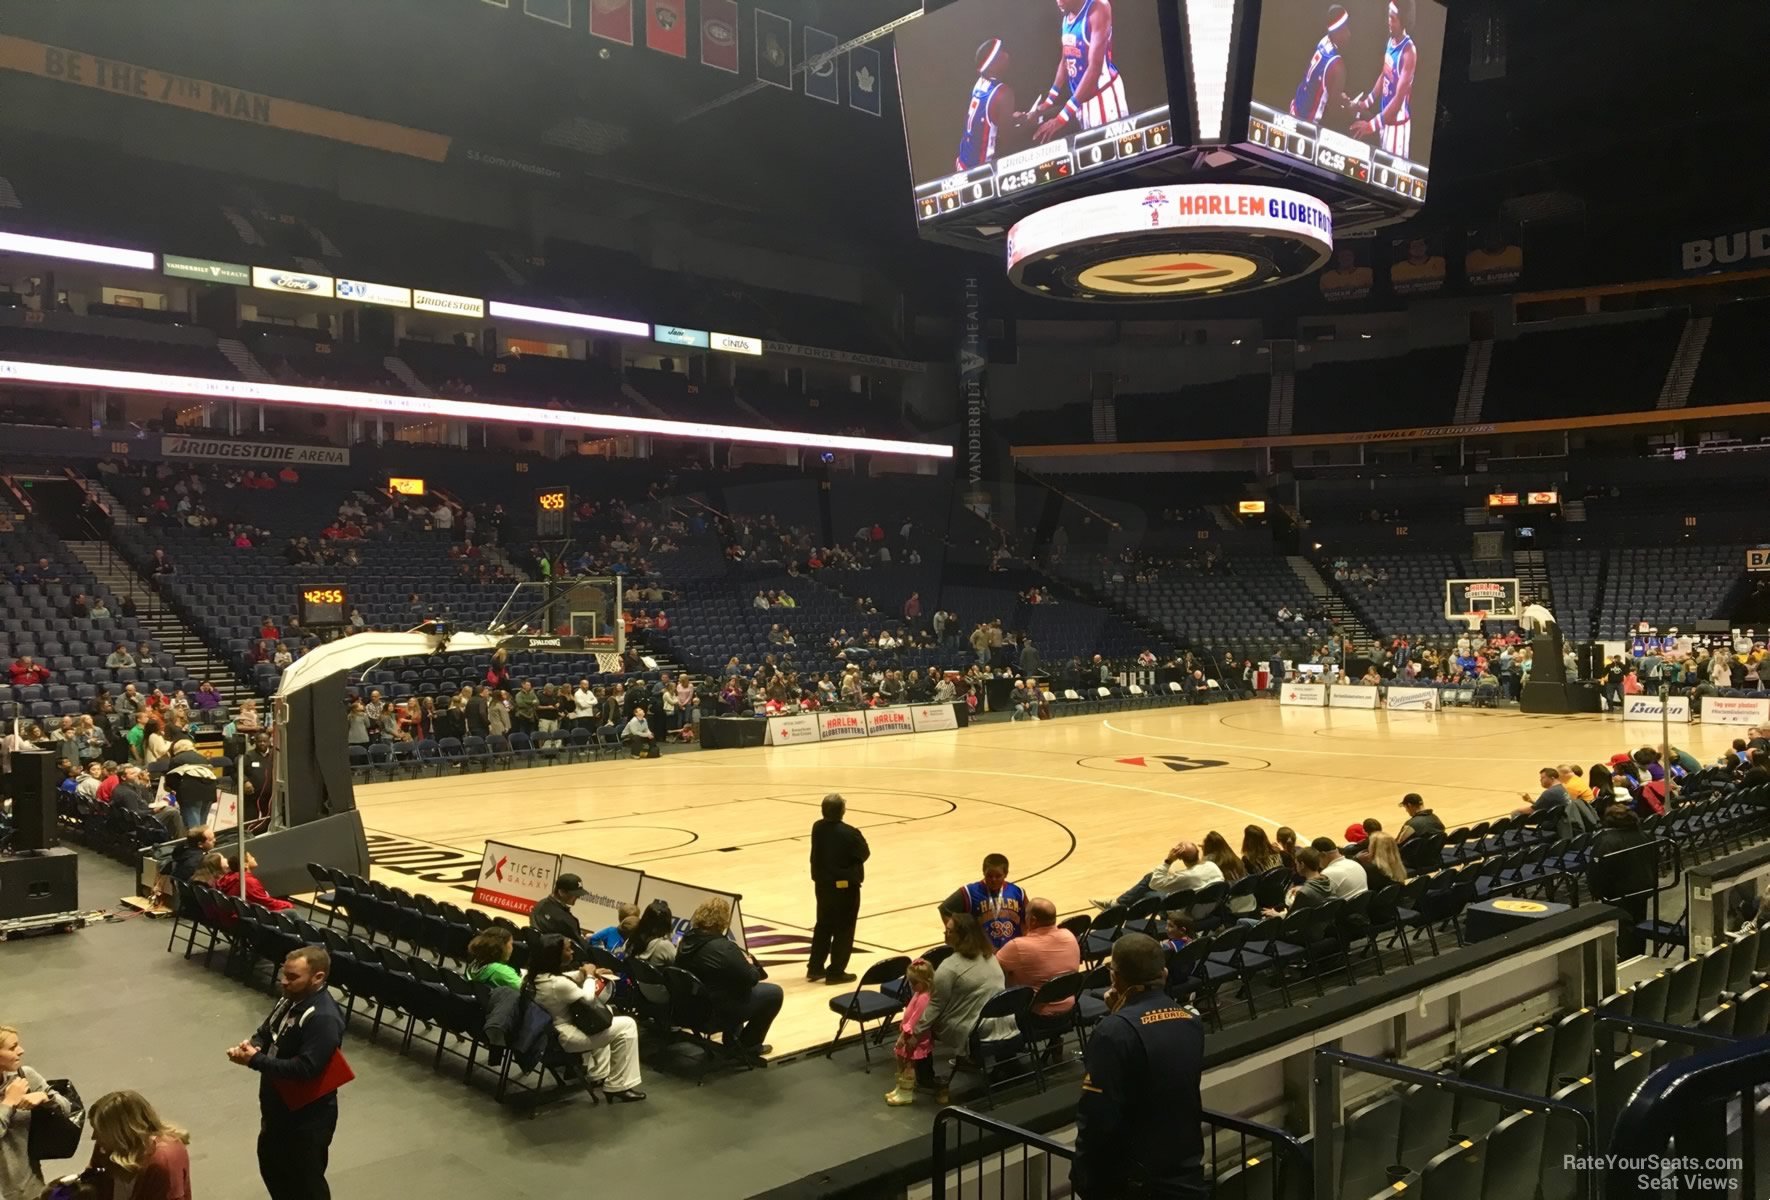 section 103, row gg seat view  for basketball - bridgestone arena